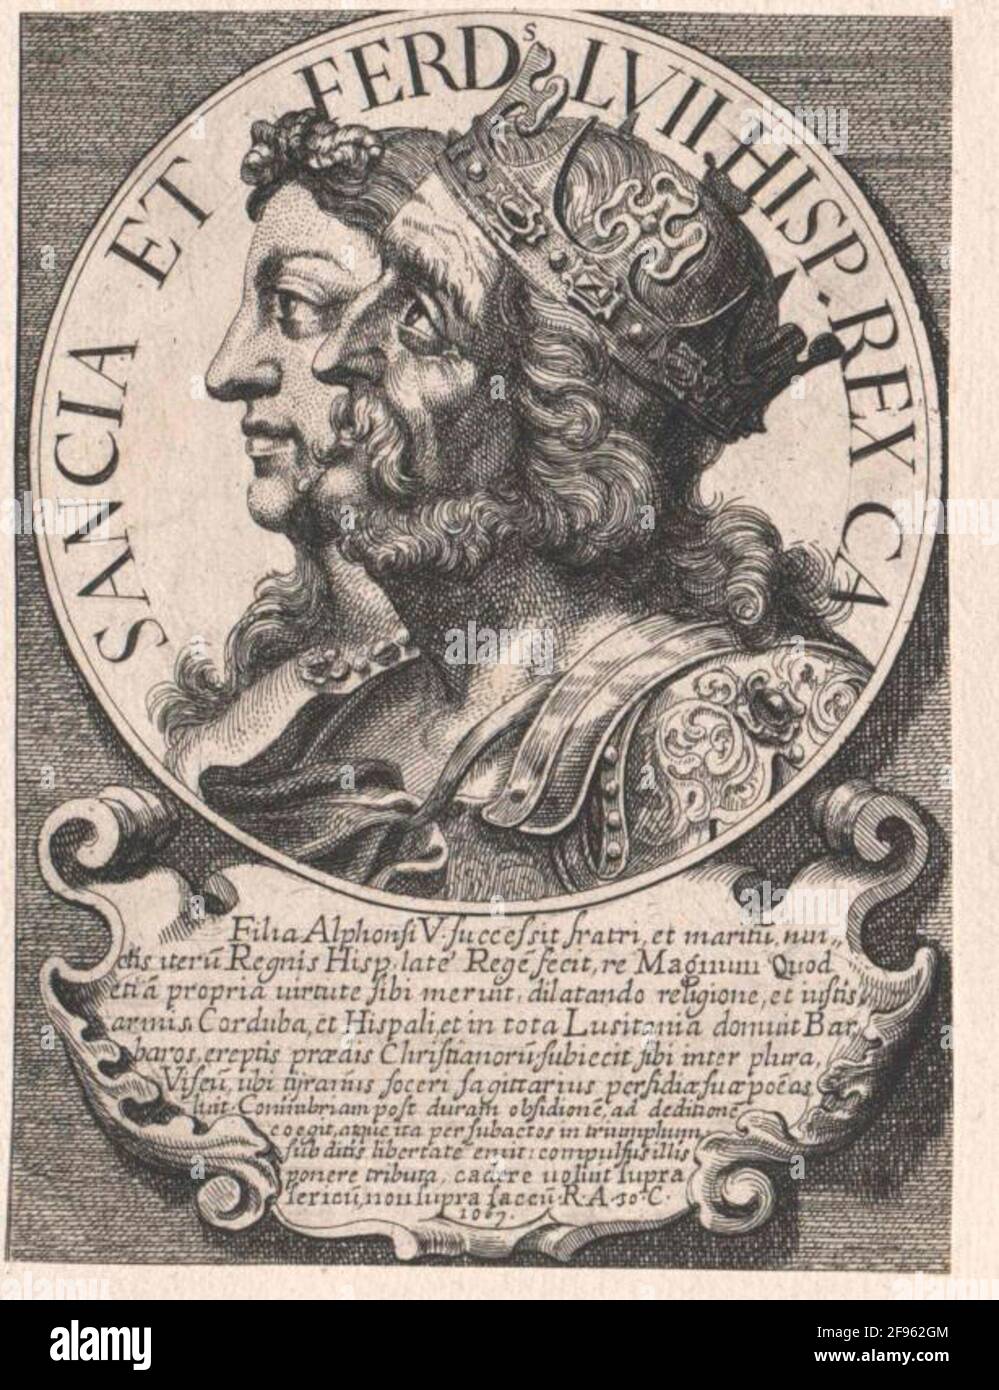 Ferdinand I., King of Castile and León. Stock Photo